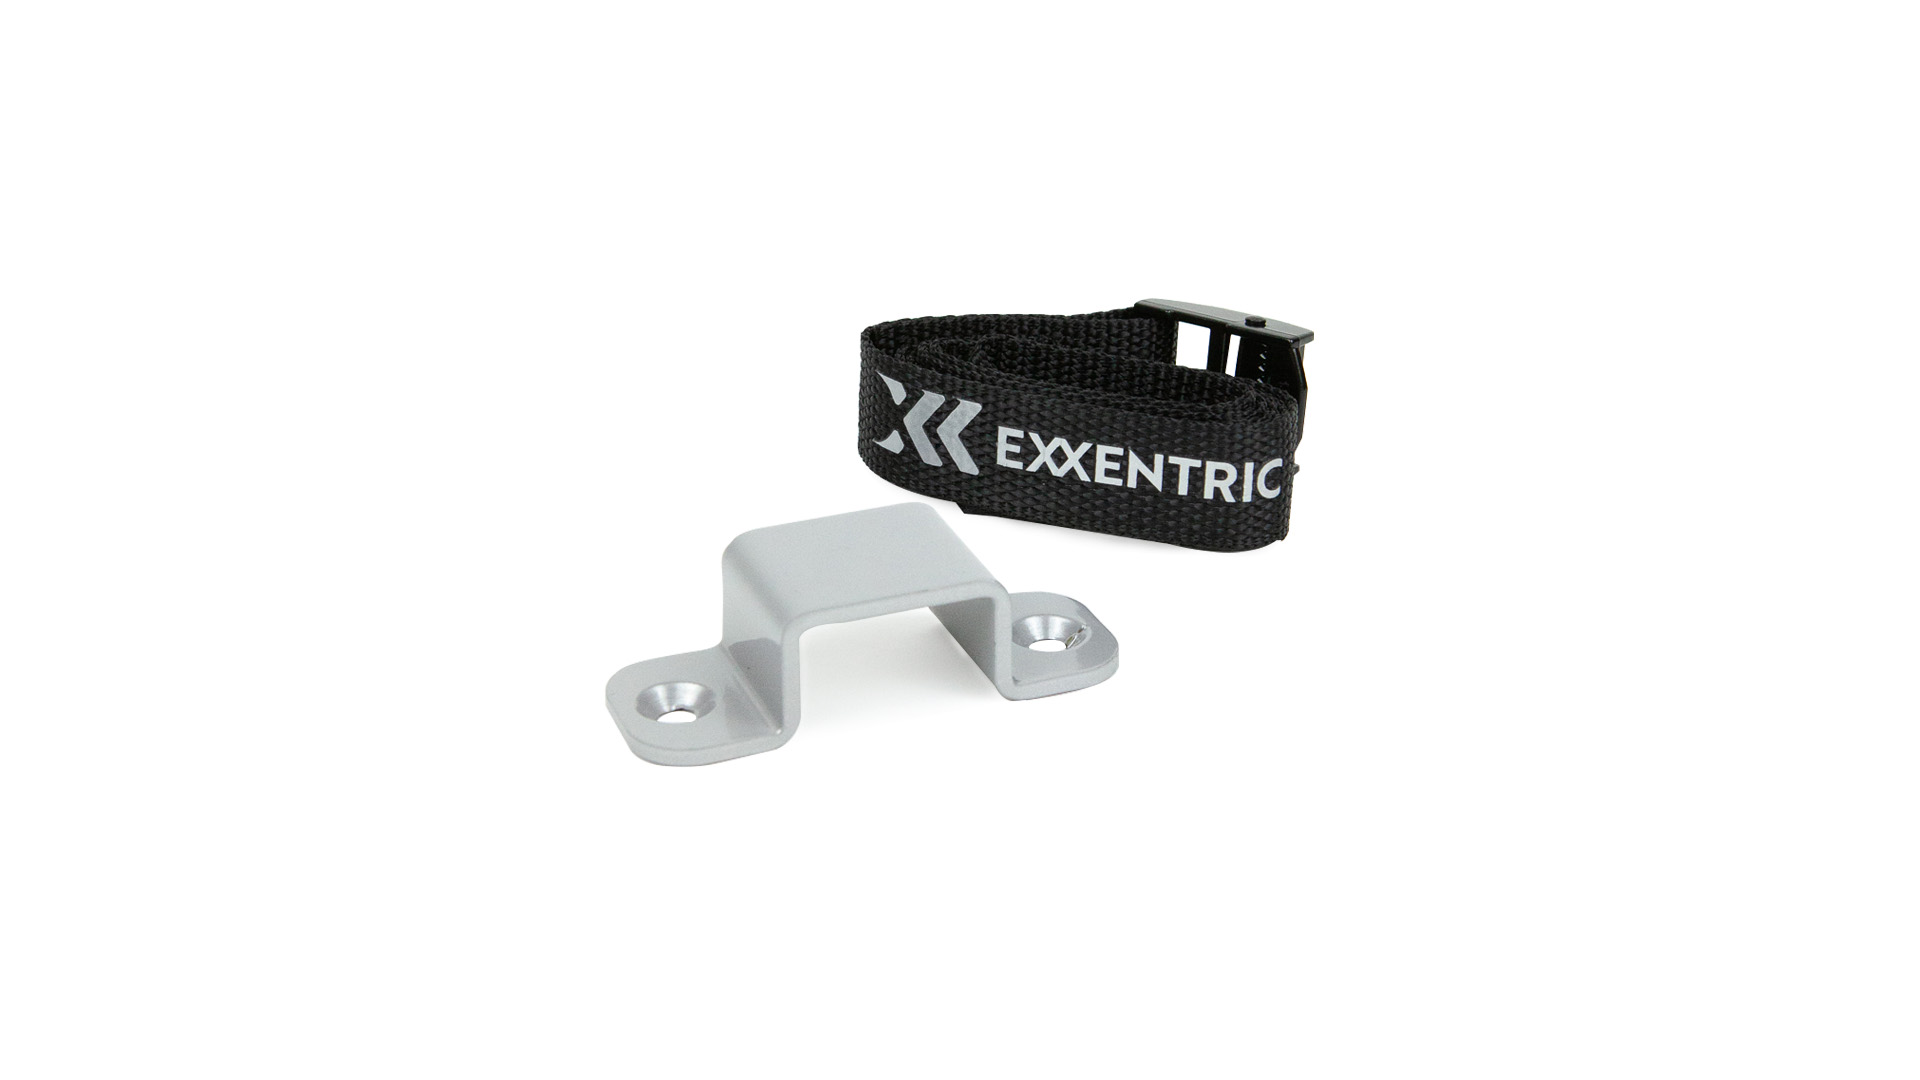 Exxentric kBox4 Attachment Kit